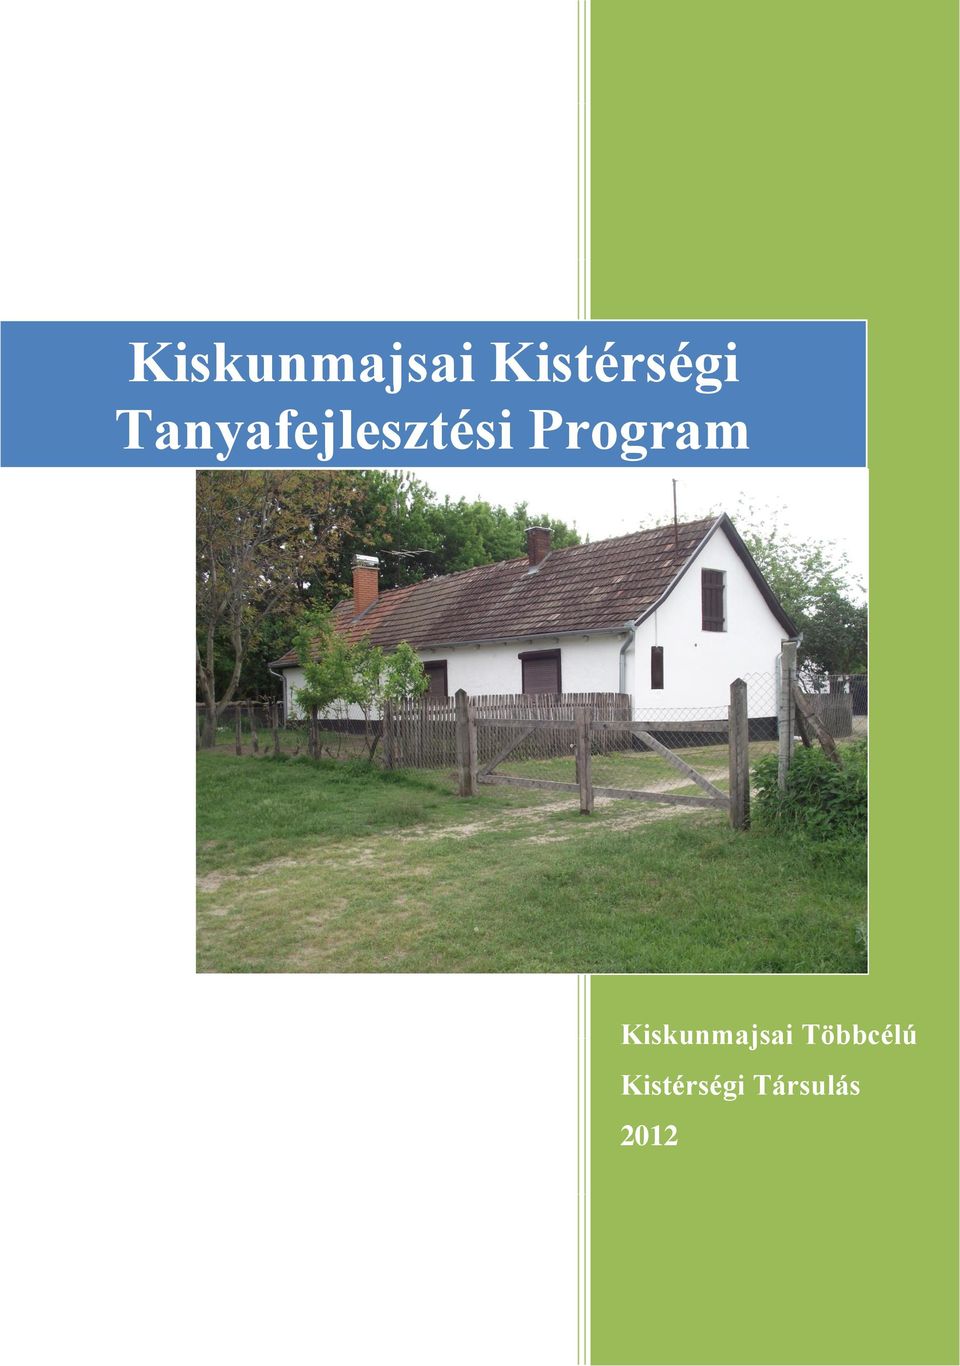 Program Kiskunmajsai